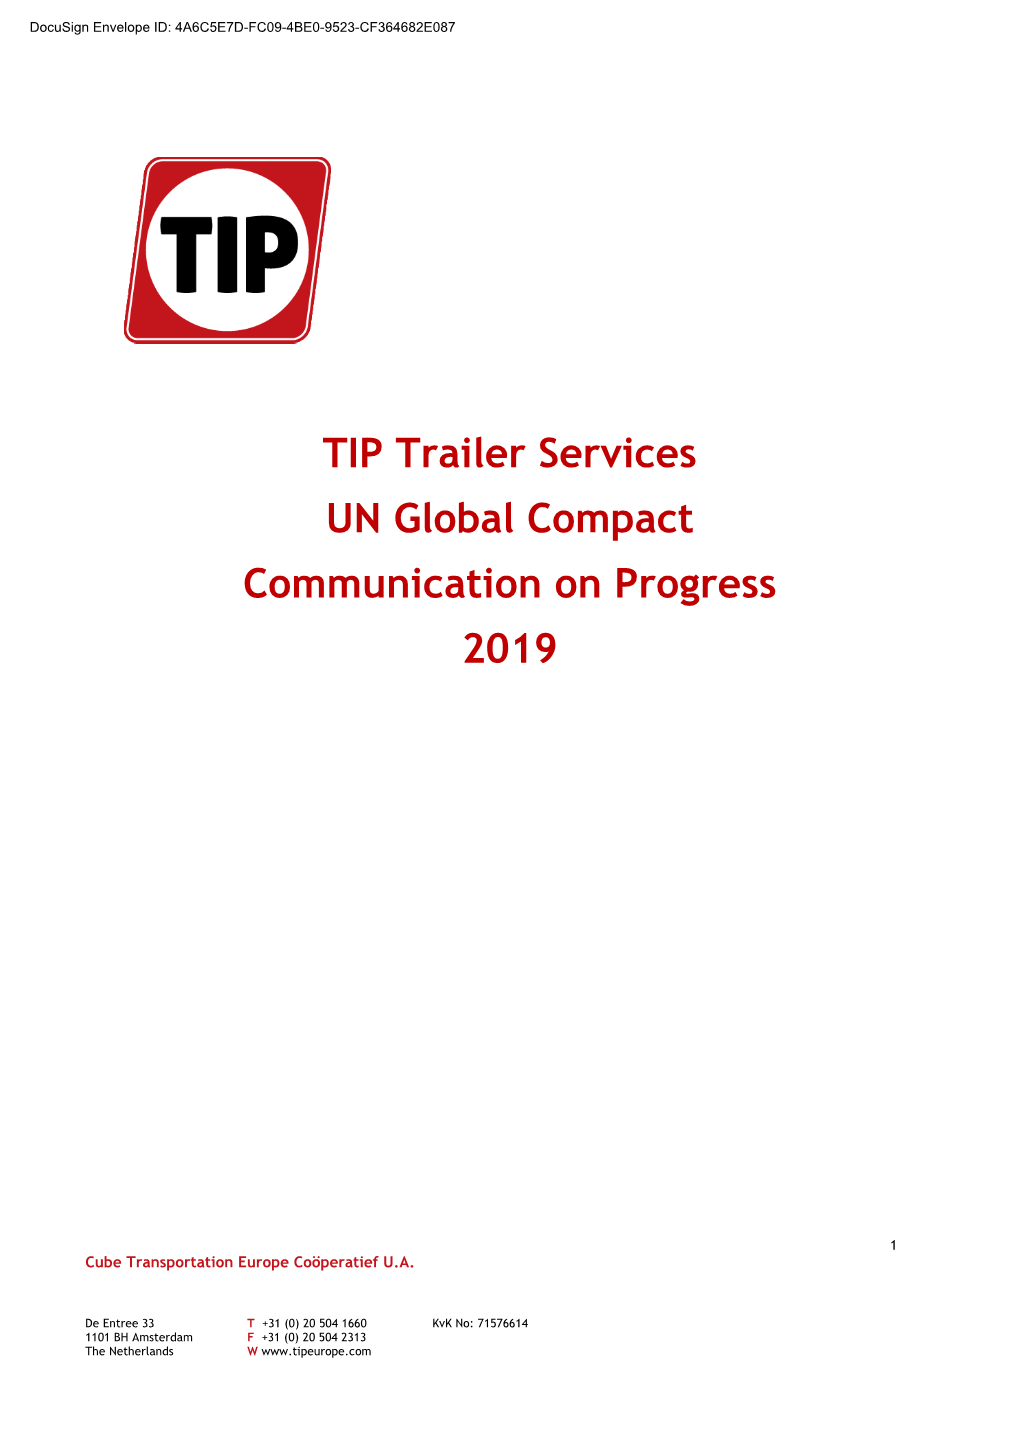 TIP Trailer Services UN Global Compact Communication on Progress 2019